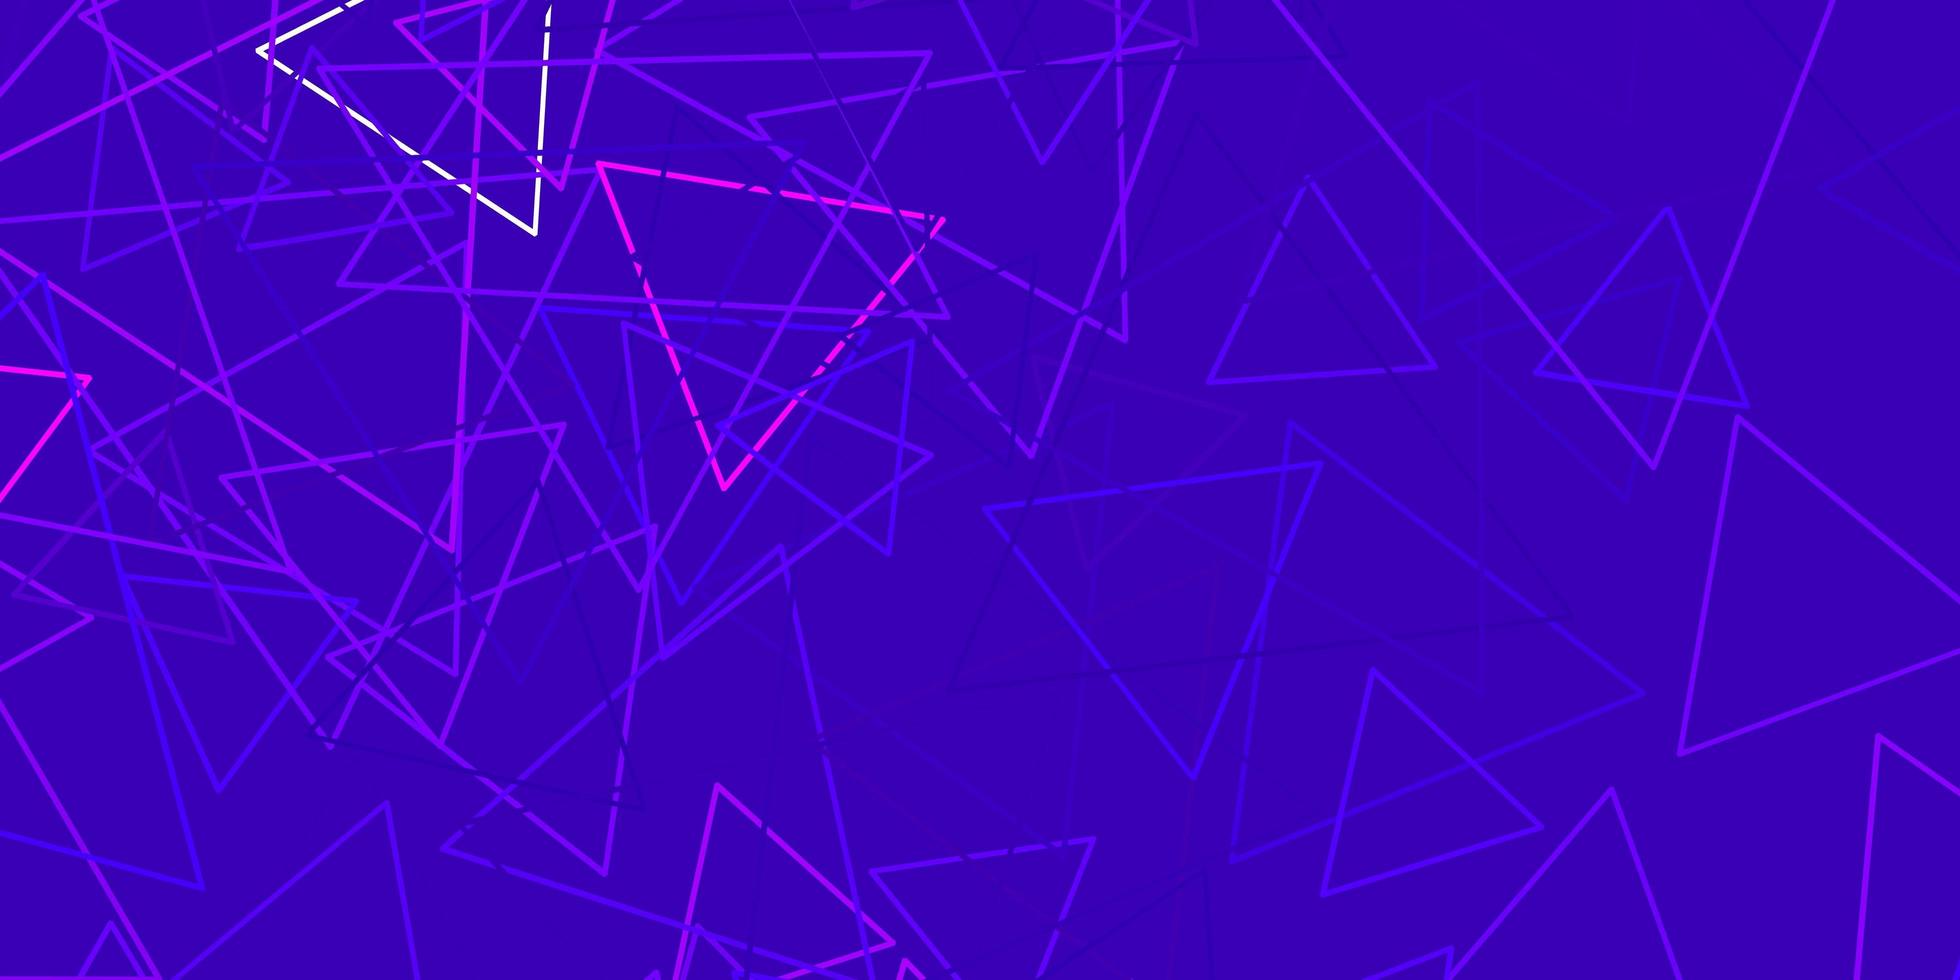 textura vector roxo escuro com triângulos aleatórios.